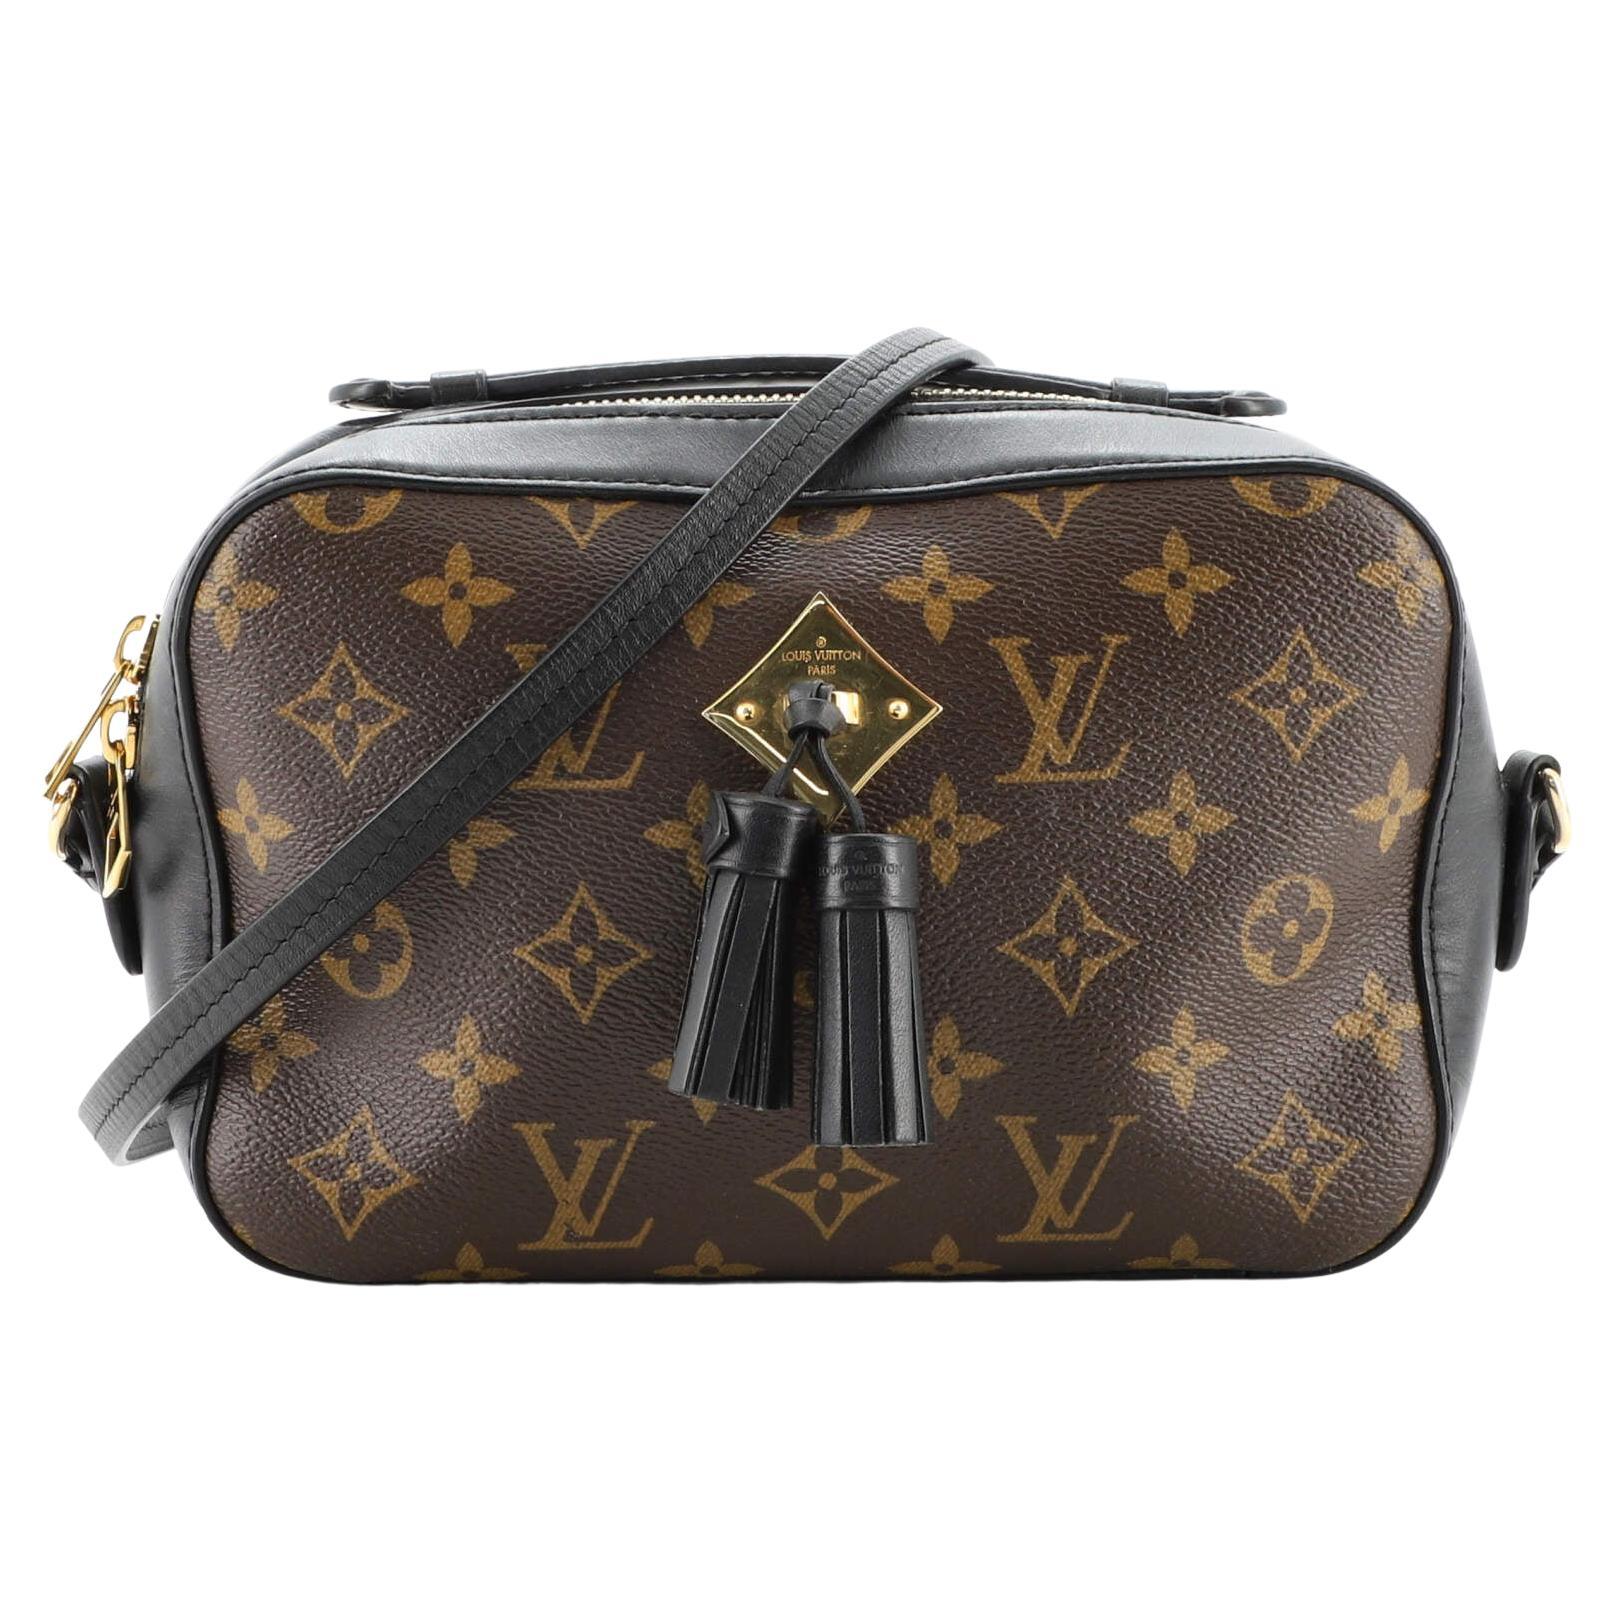 Louis Vuitton Saintonge Handbag Monogram Canvas with Leather at